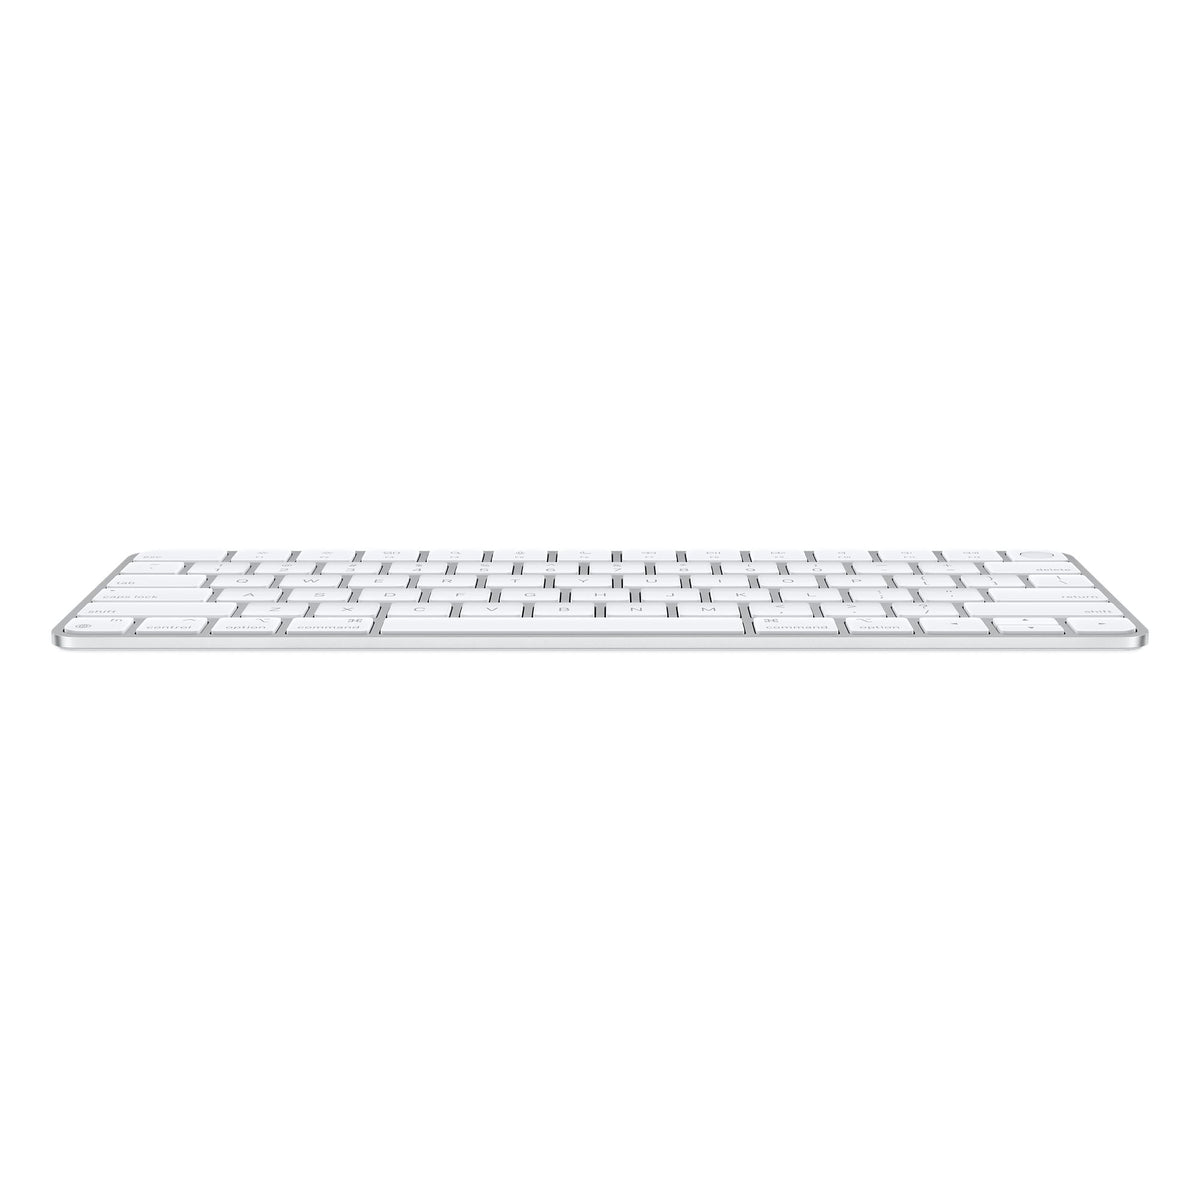 Magic Keyboard con Touch ID para modelos de Mac con chip de Apple